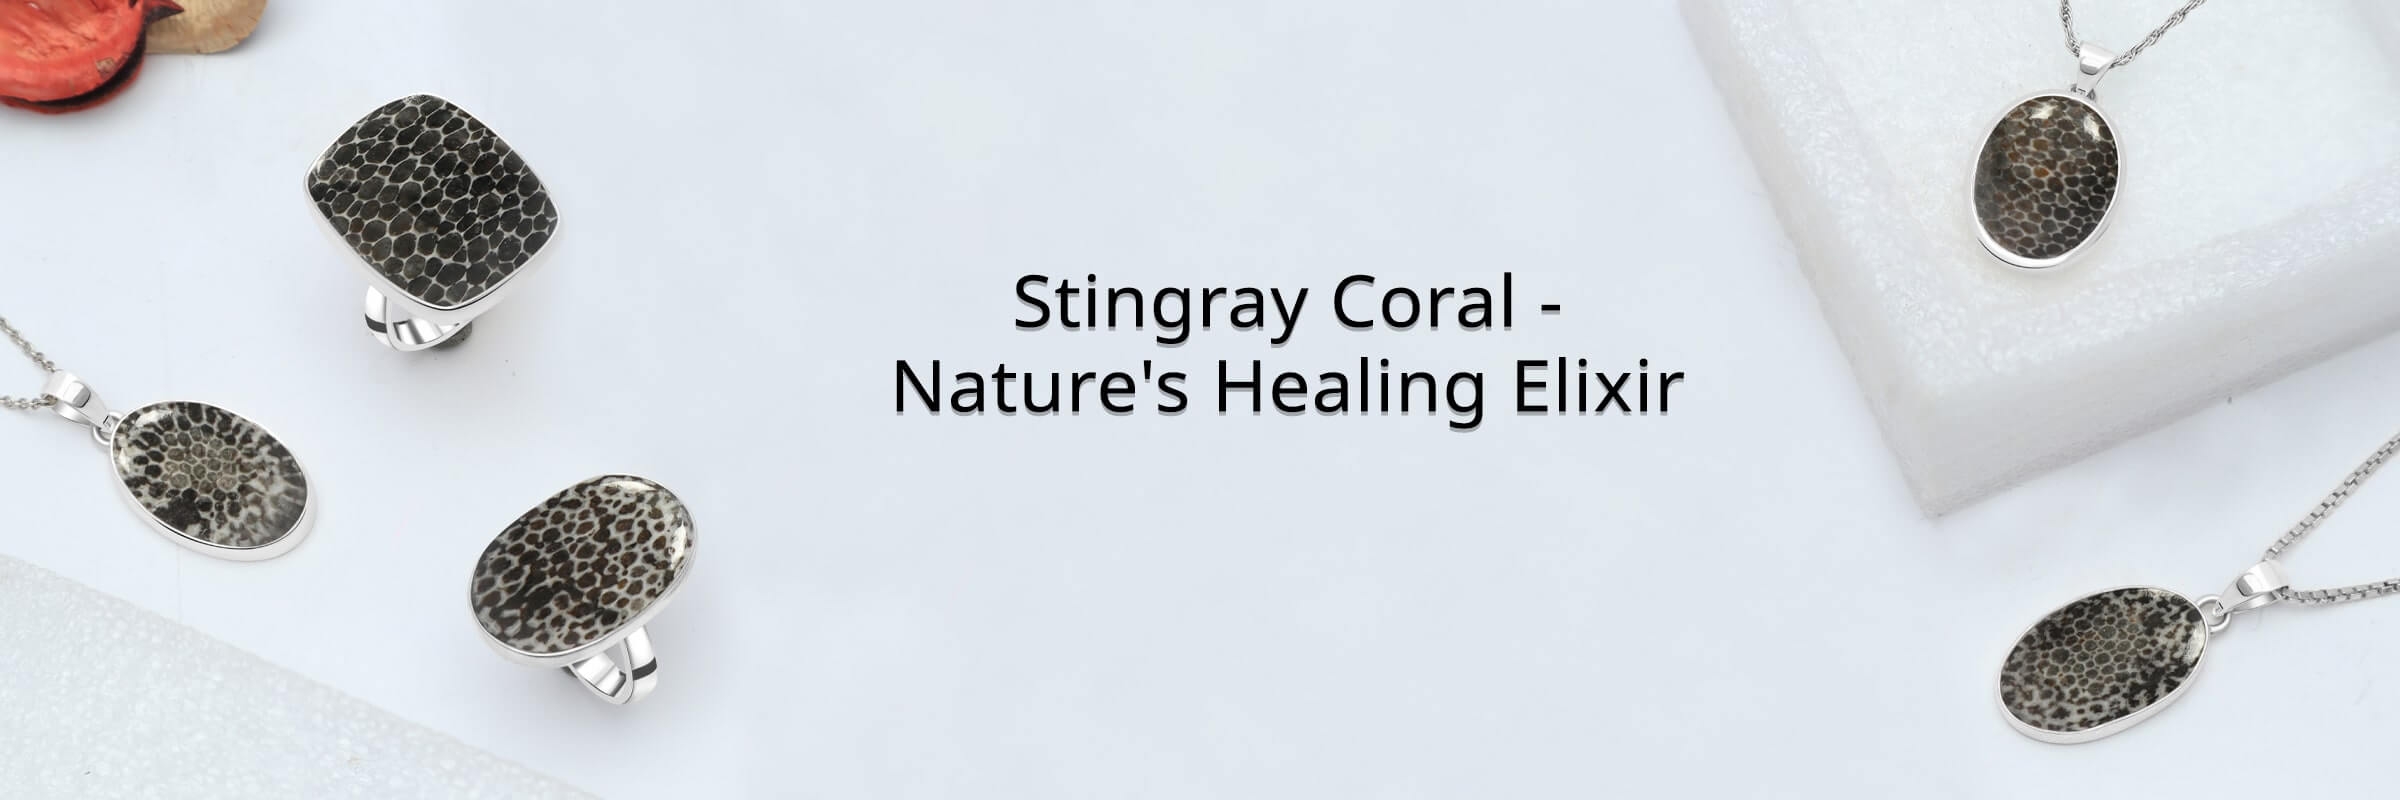 Stingray Coral Healing Properties